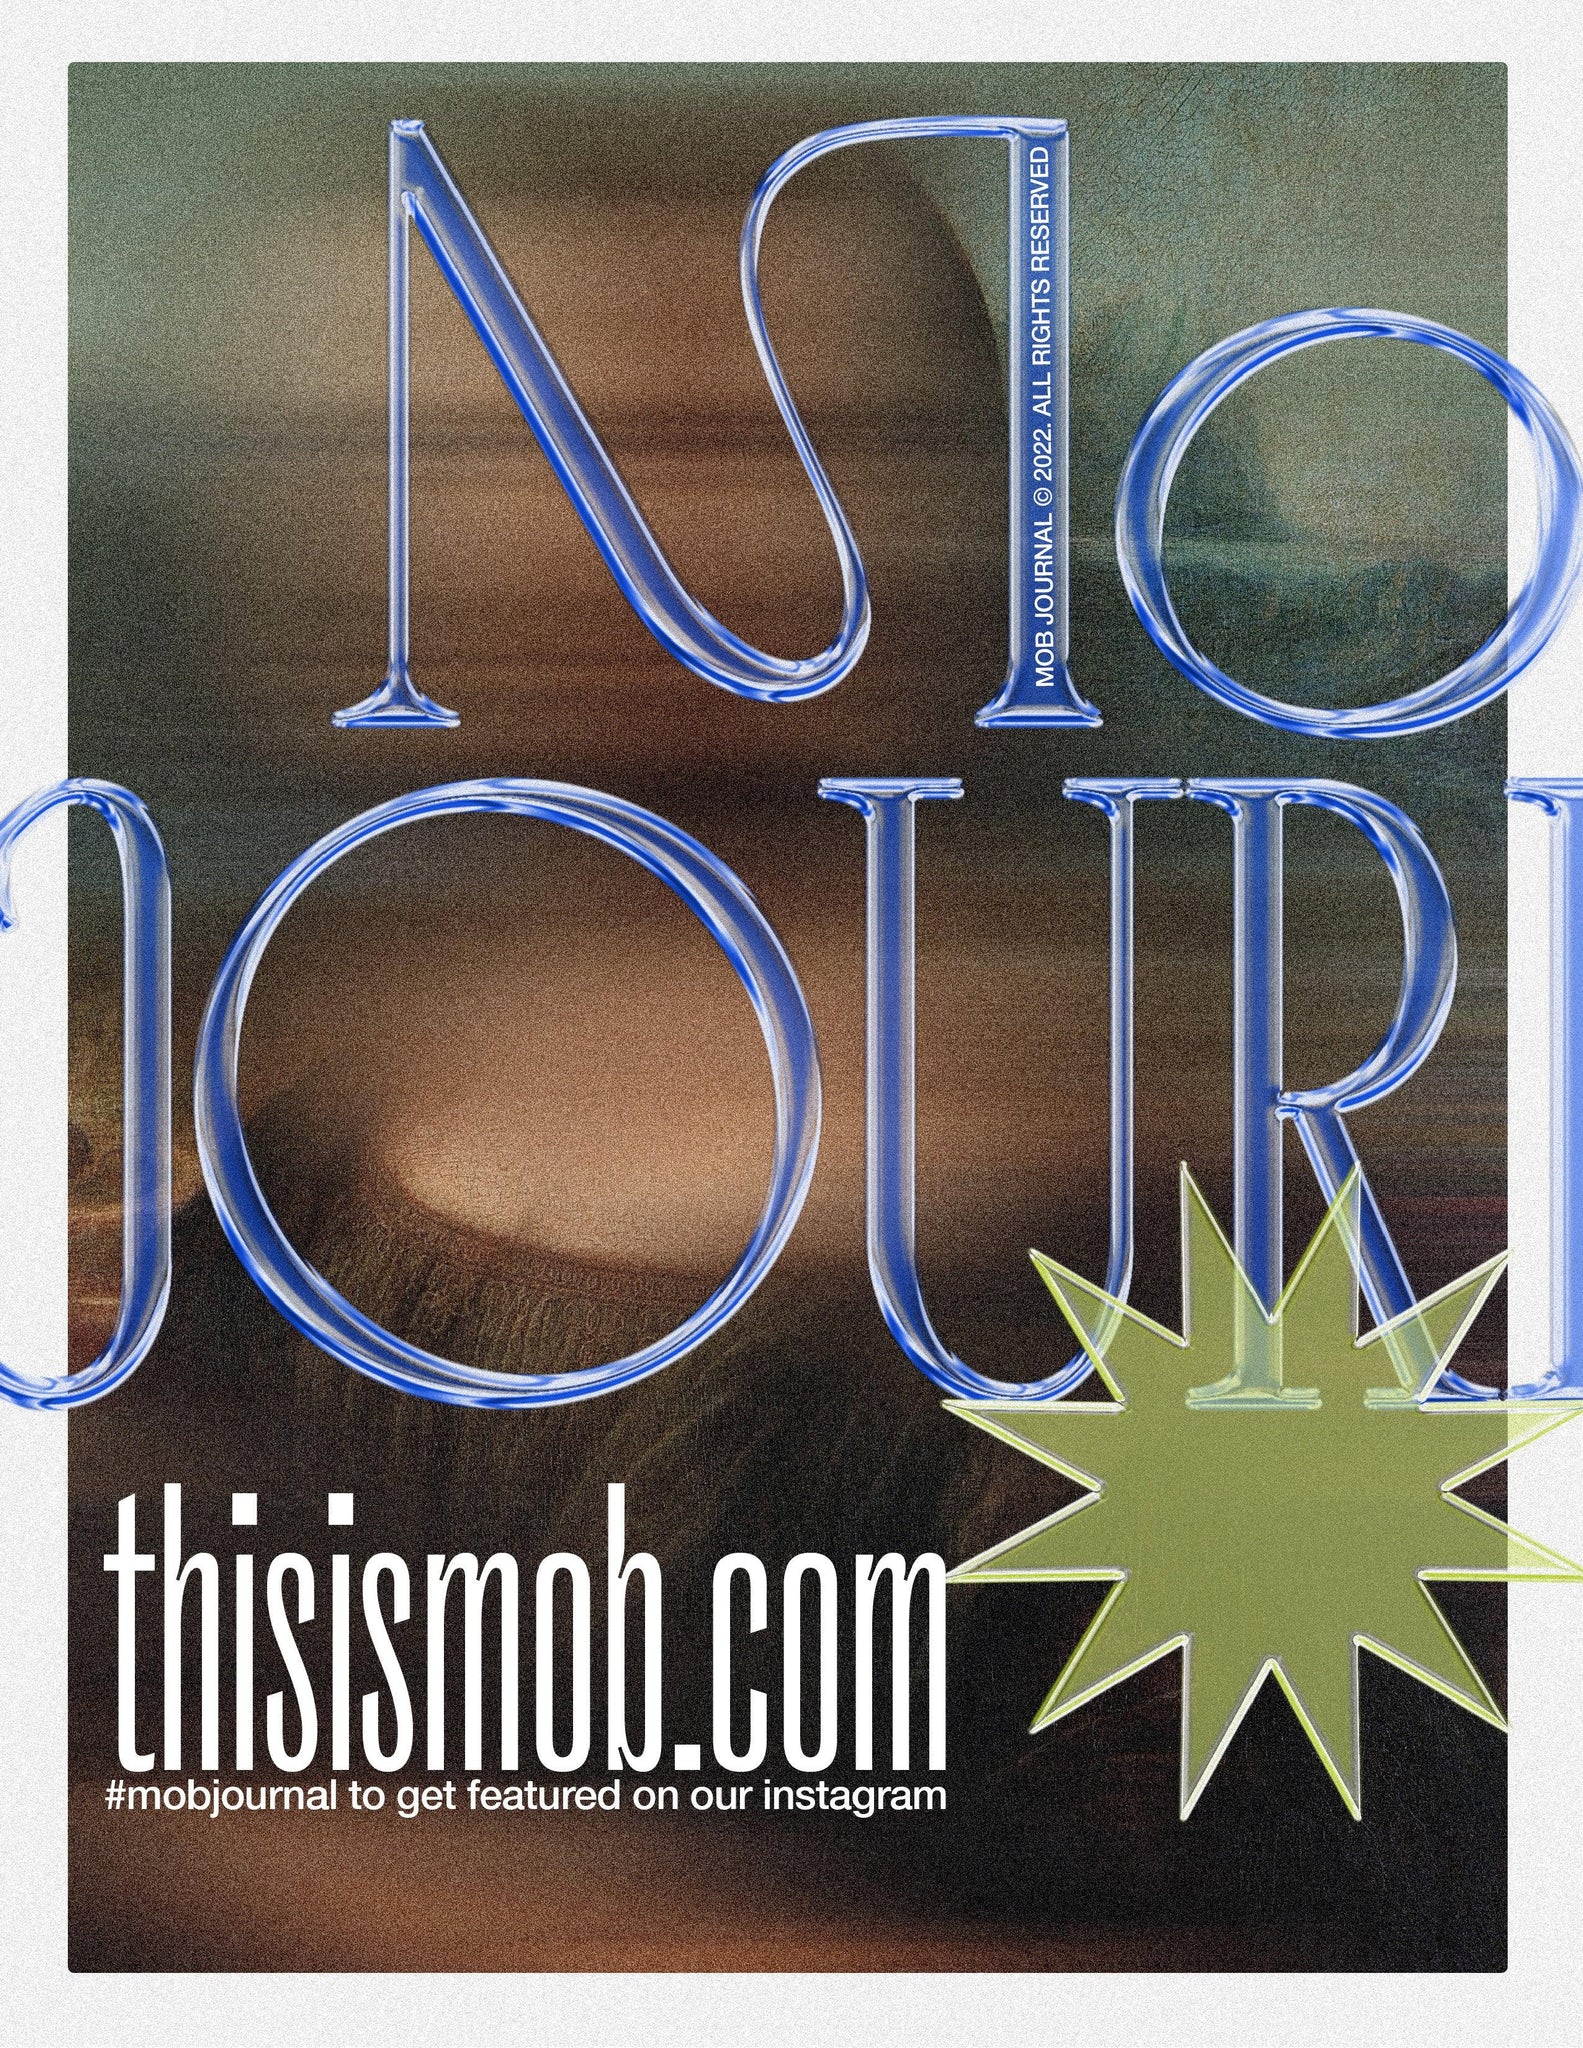 MOB JOURNAL | VOLUME TWENTY SIX | ISSUE #28 - Mob Journal